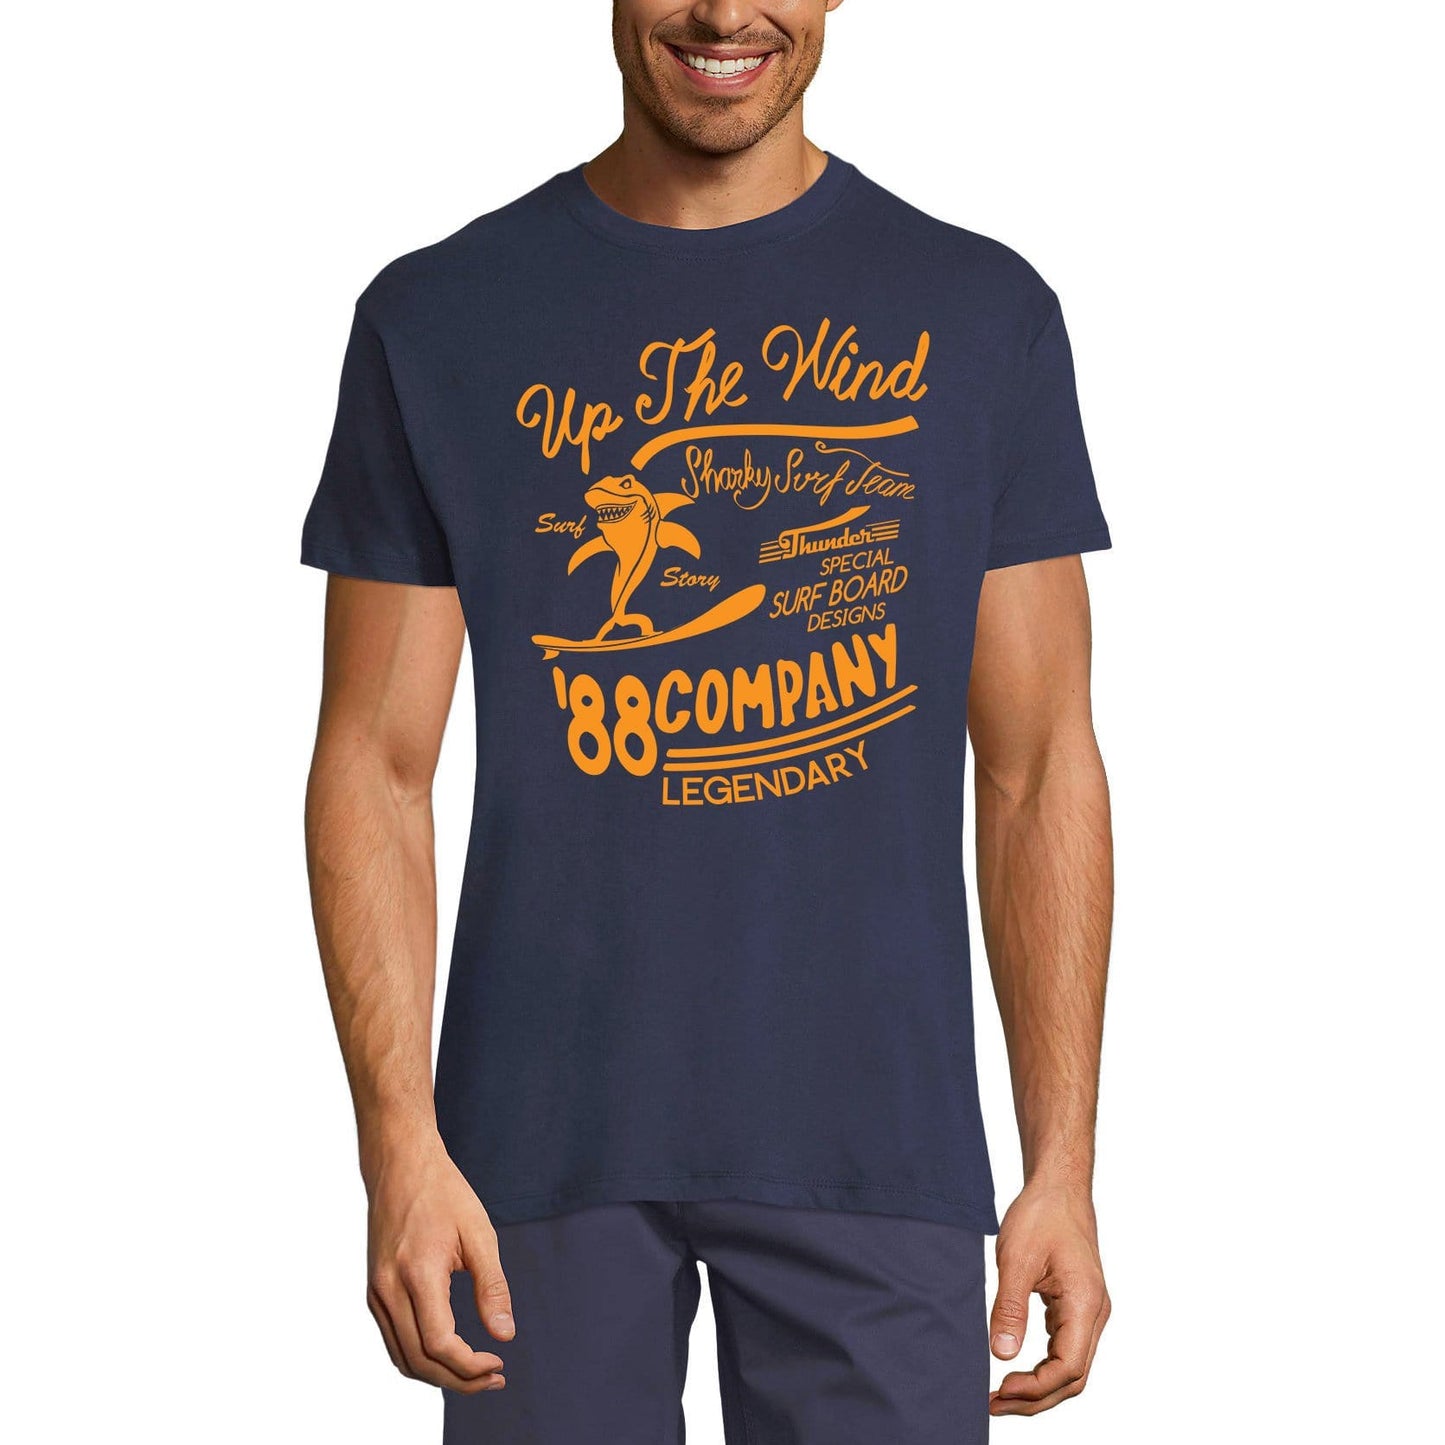 ULTRABASIC Men's T-Shirt Up the Wind Sharky Surf Team - Funny Surfing Tee Shirt